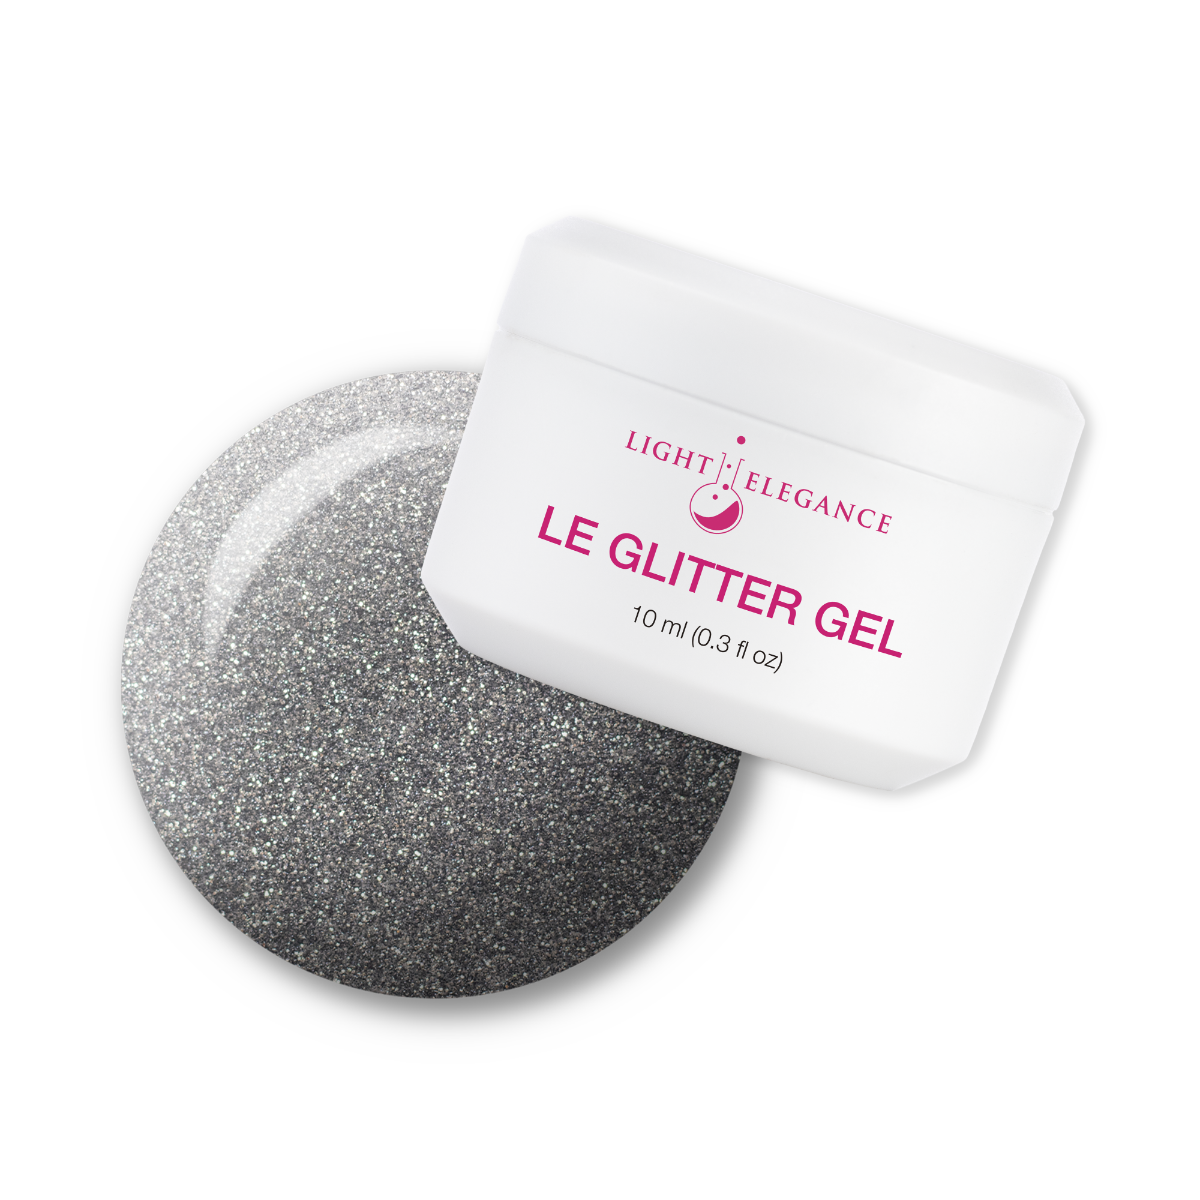 Light Elegance Glitter Gel - Clean Slate :: New Packaging